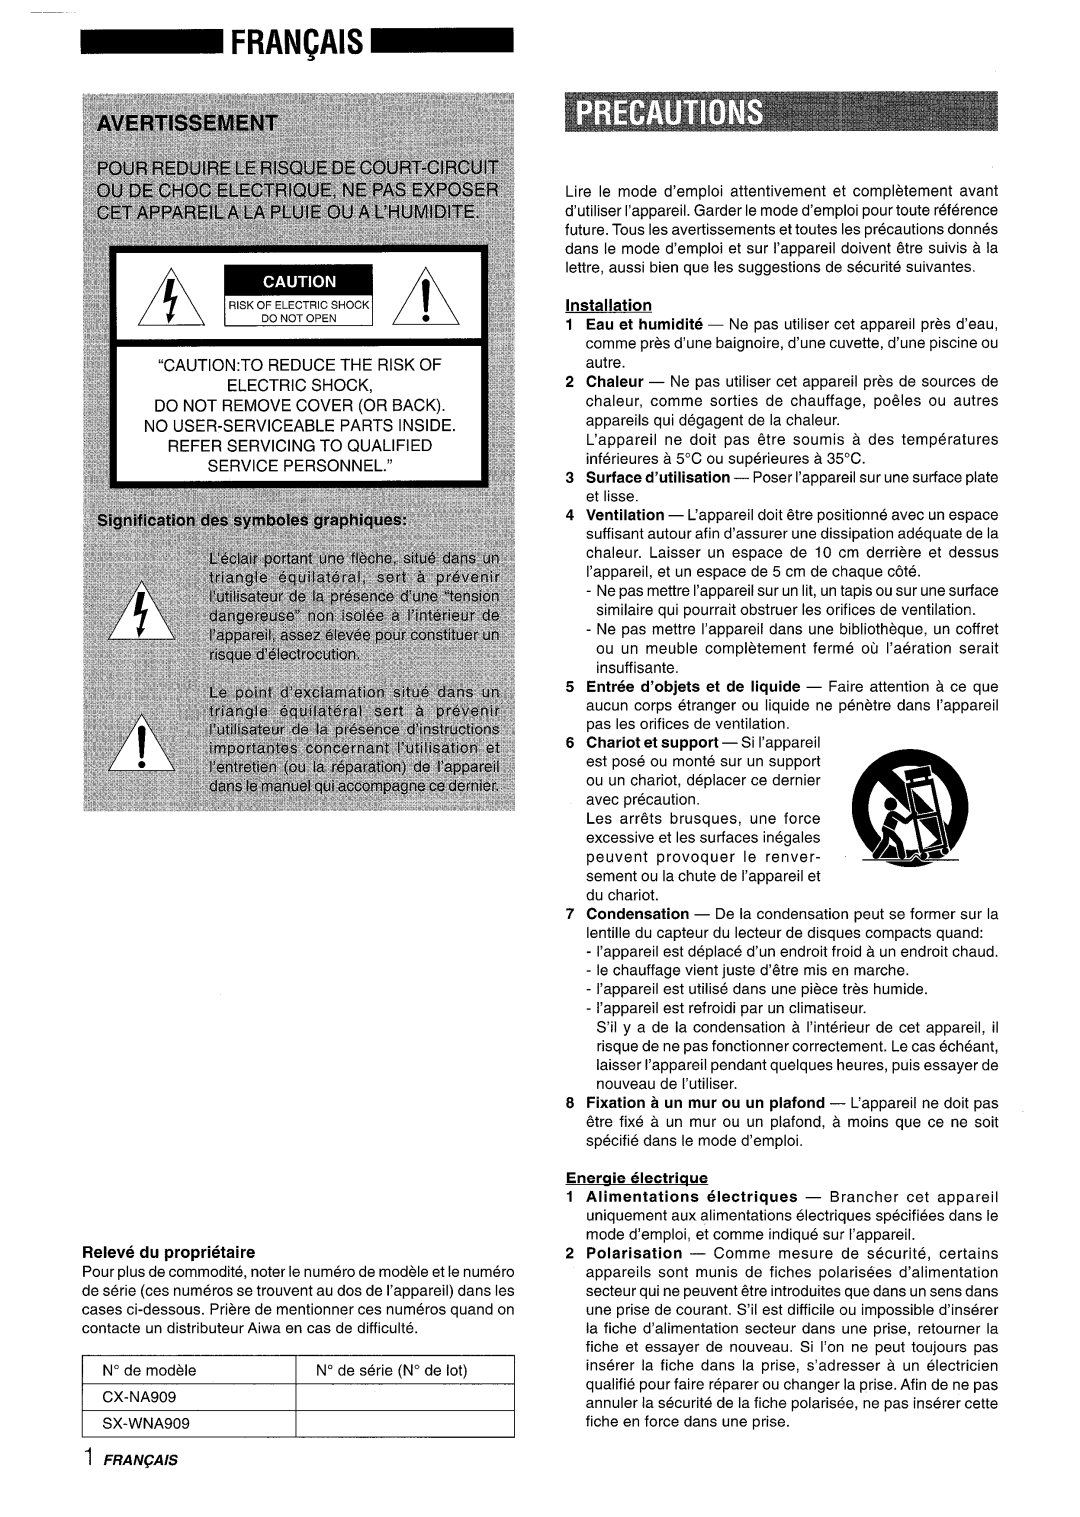 Aiwa NSX-A909 manual Releve du proprietaire, Eneraie electriaue, Fran~Ais, Installation 